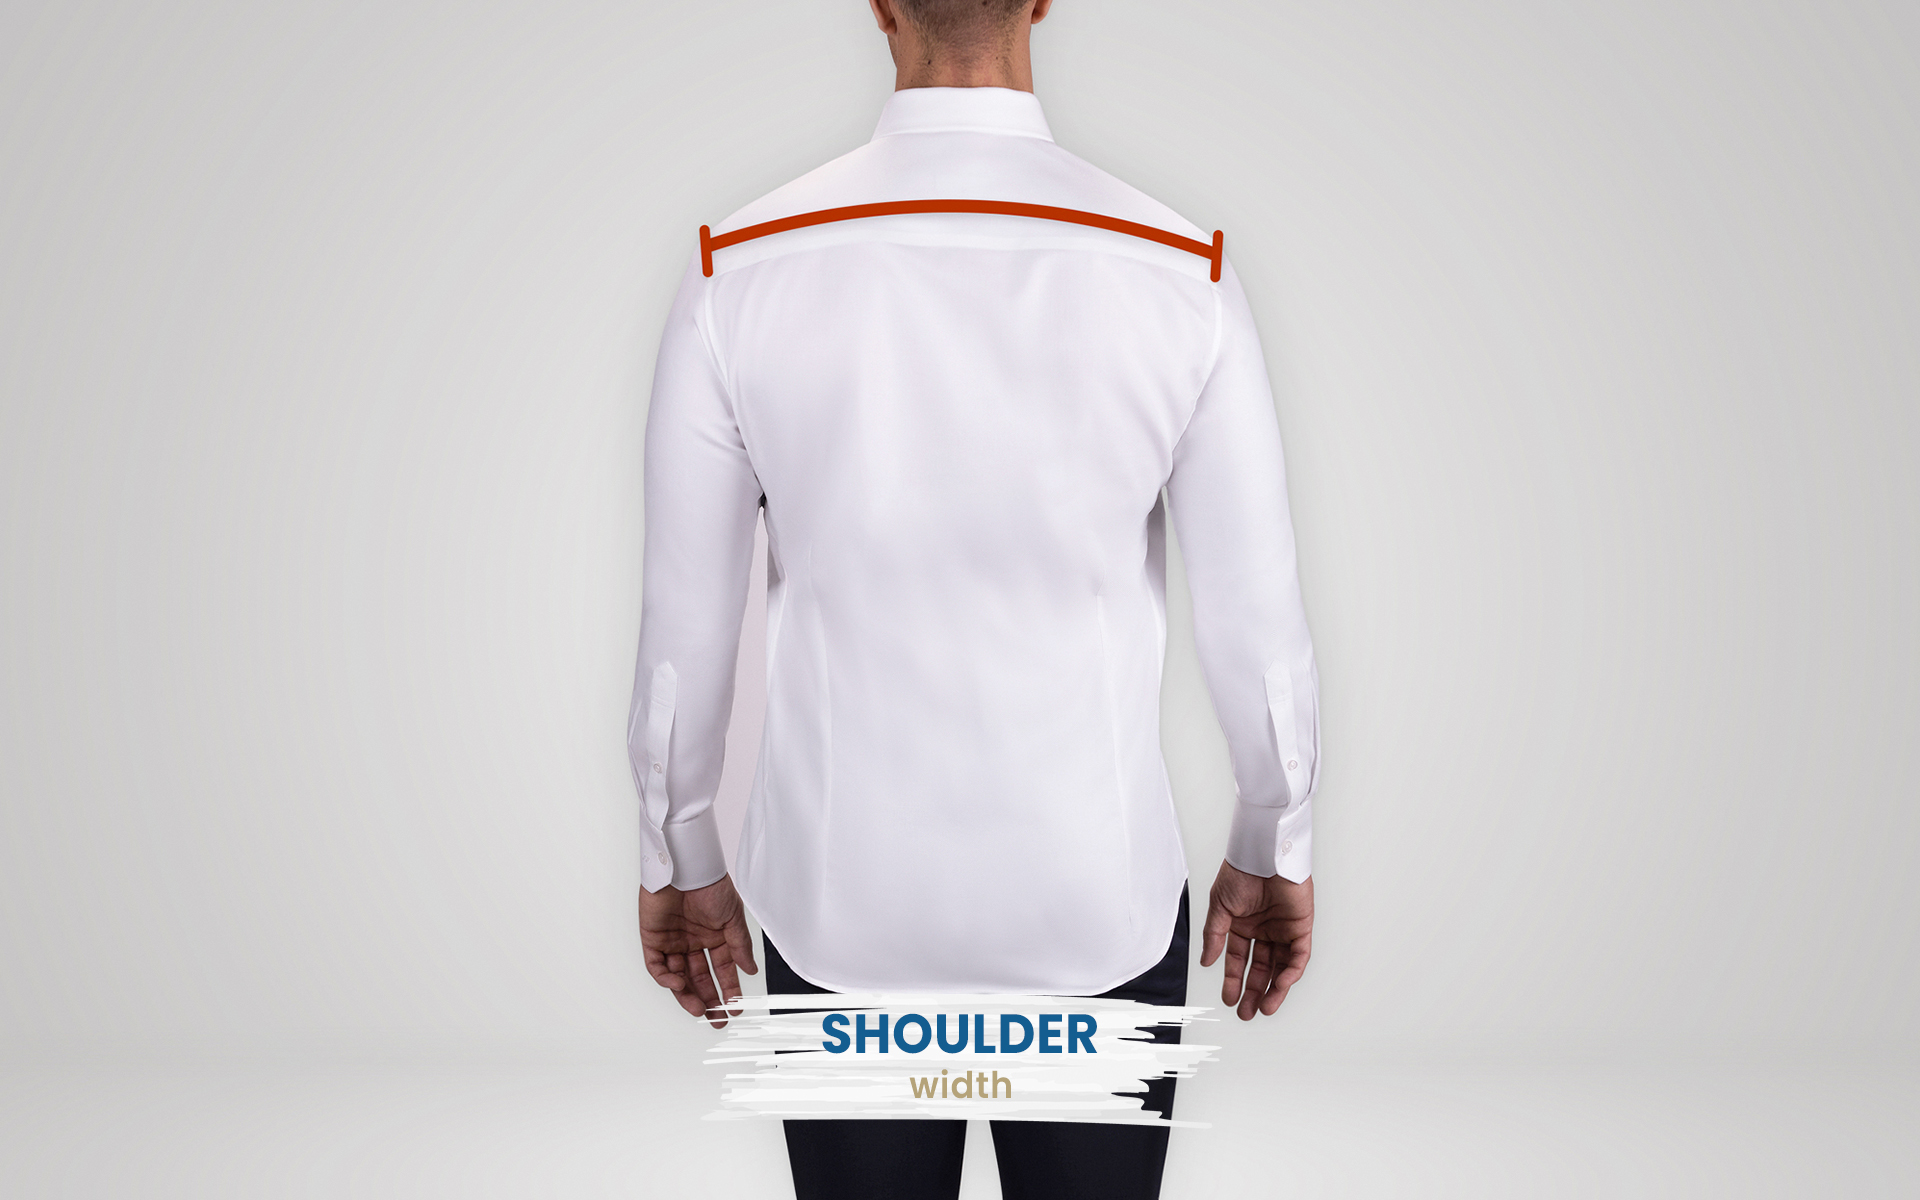 how to measure suit's shoulder width